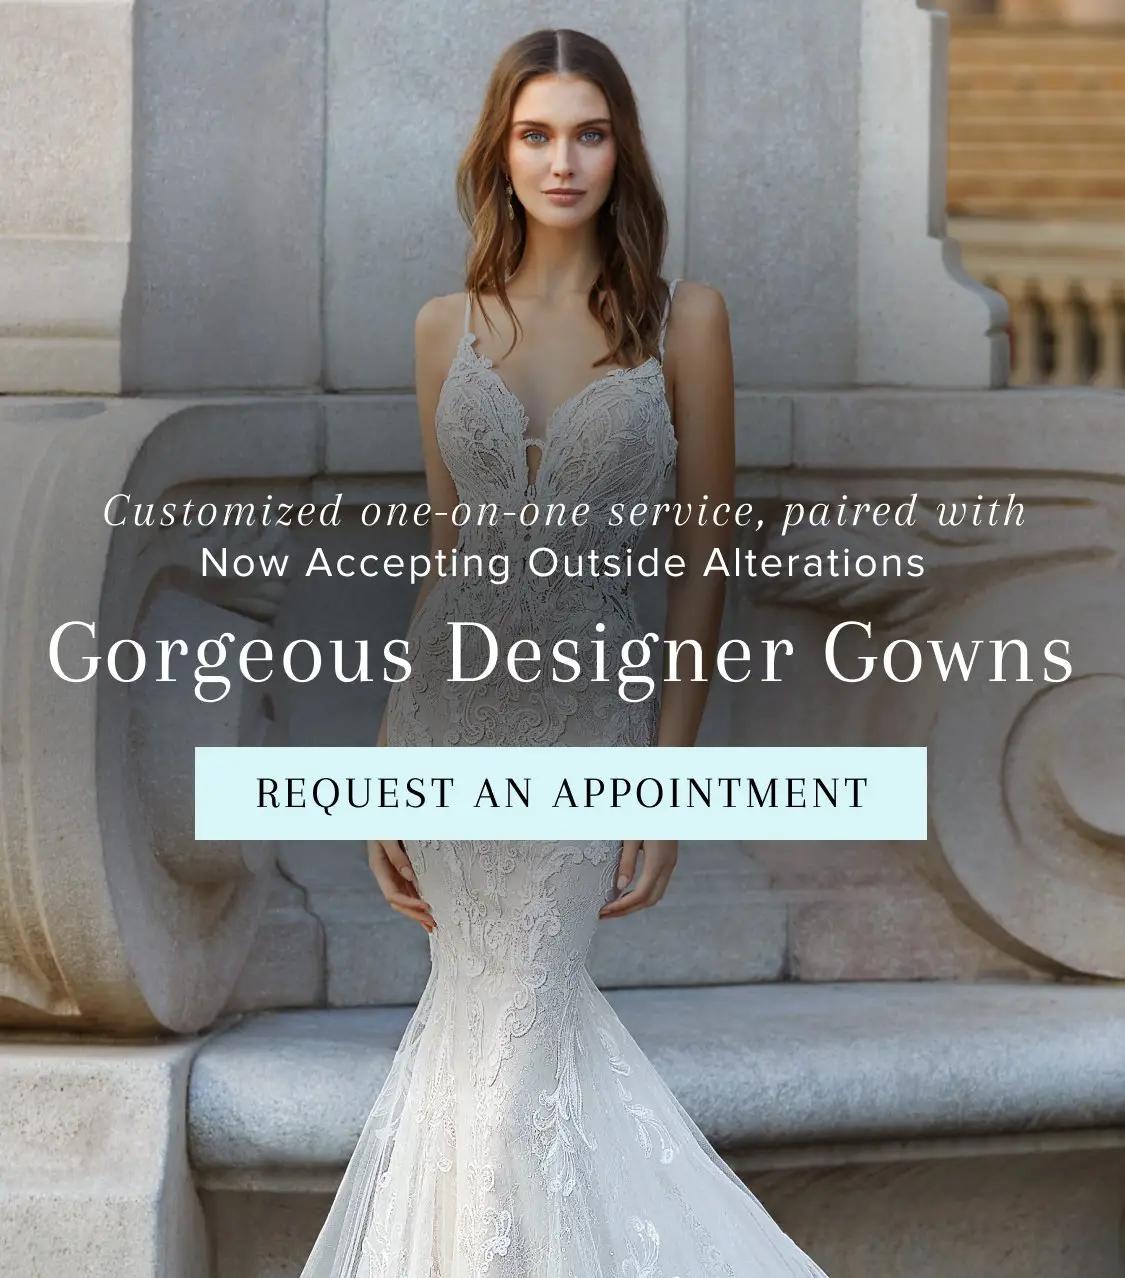 Gorgeous Designer Gowns